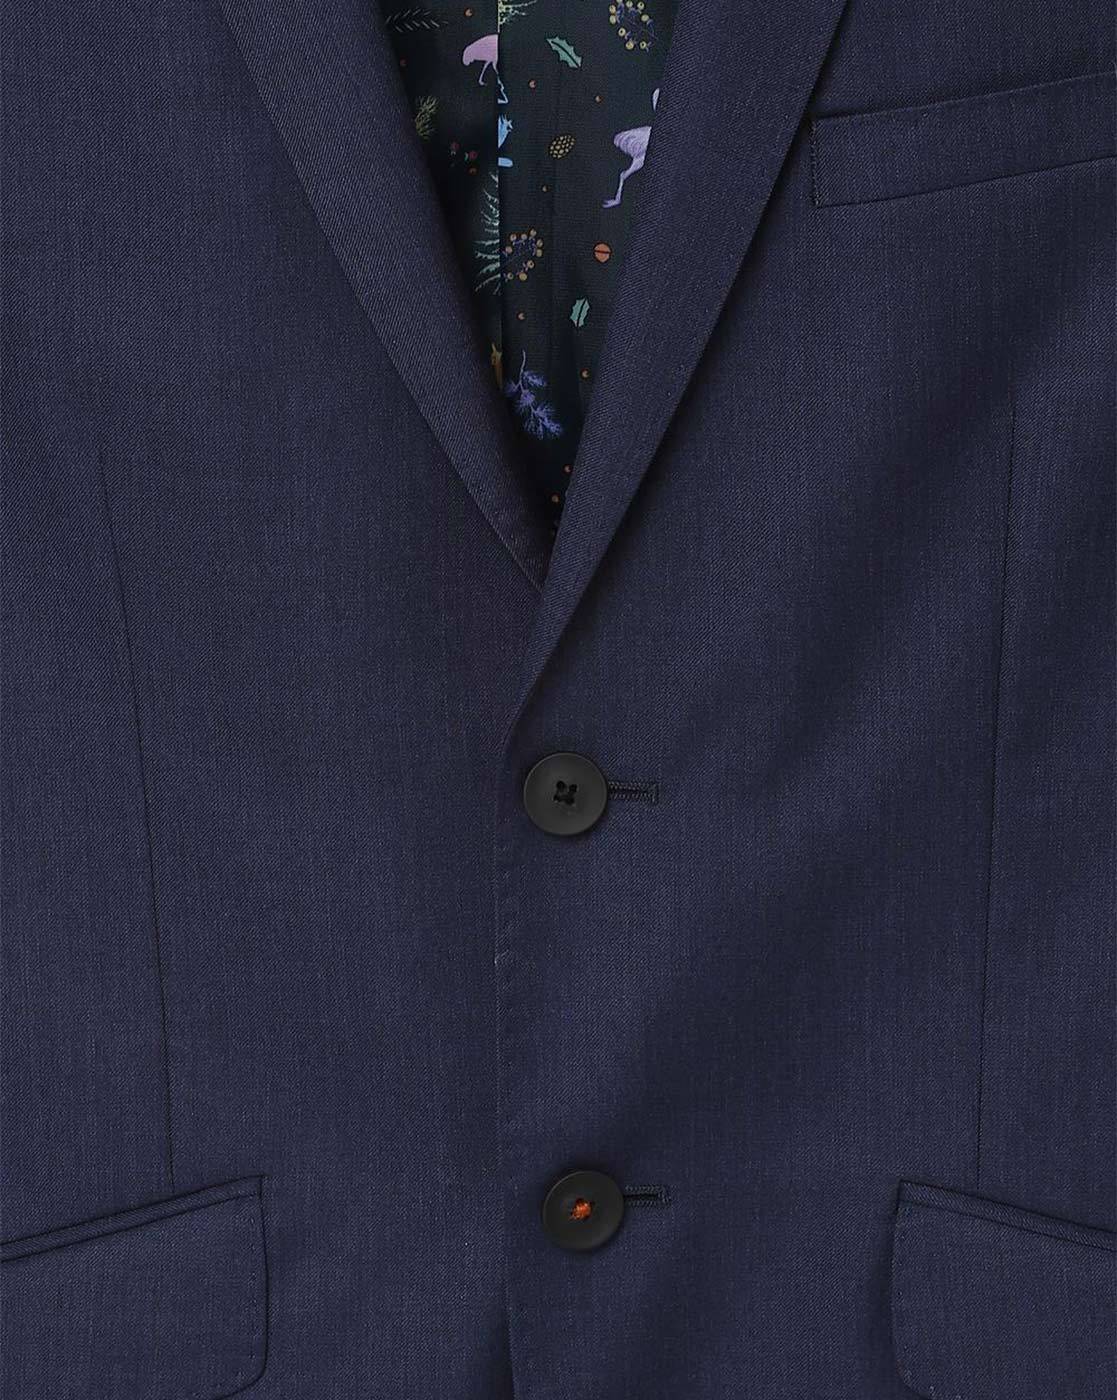 Buy Navy Blue Blazers & Waistcoats for Men by SIMON CARTER Online